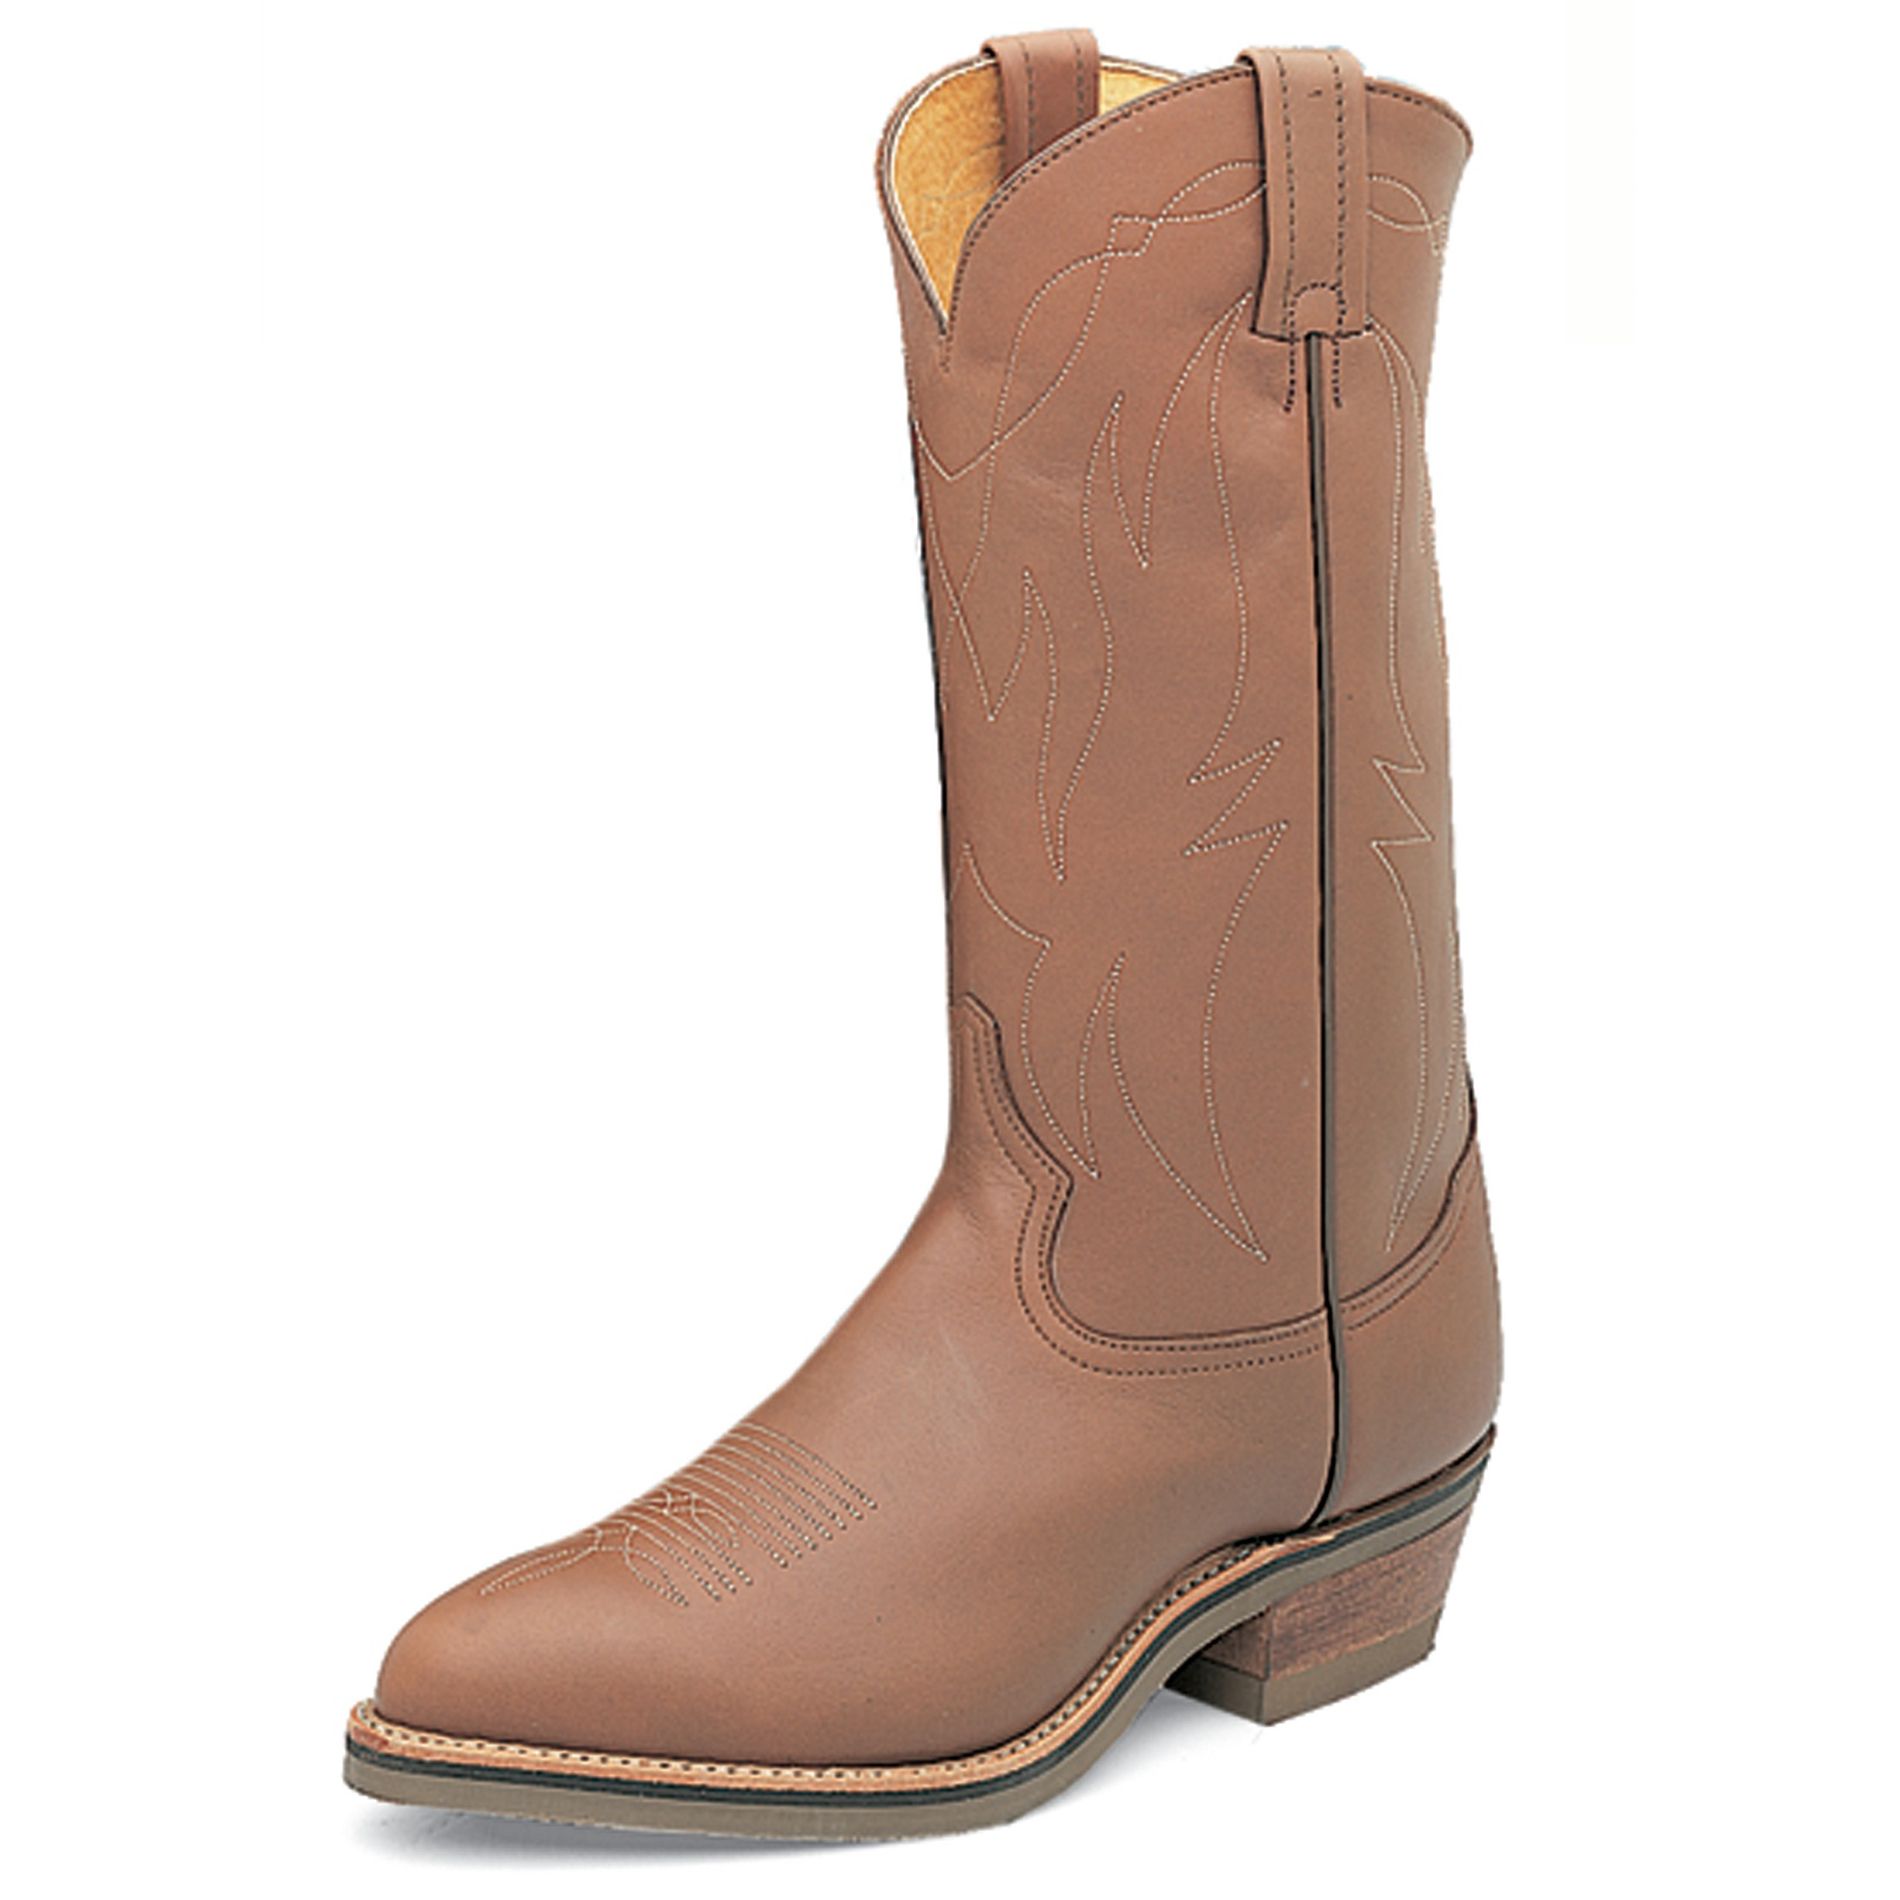 Men's 4013 13" Stockman Western Cowboy Boot - Natural